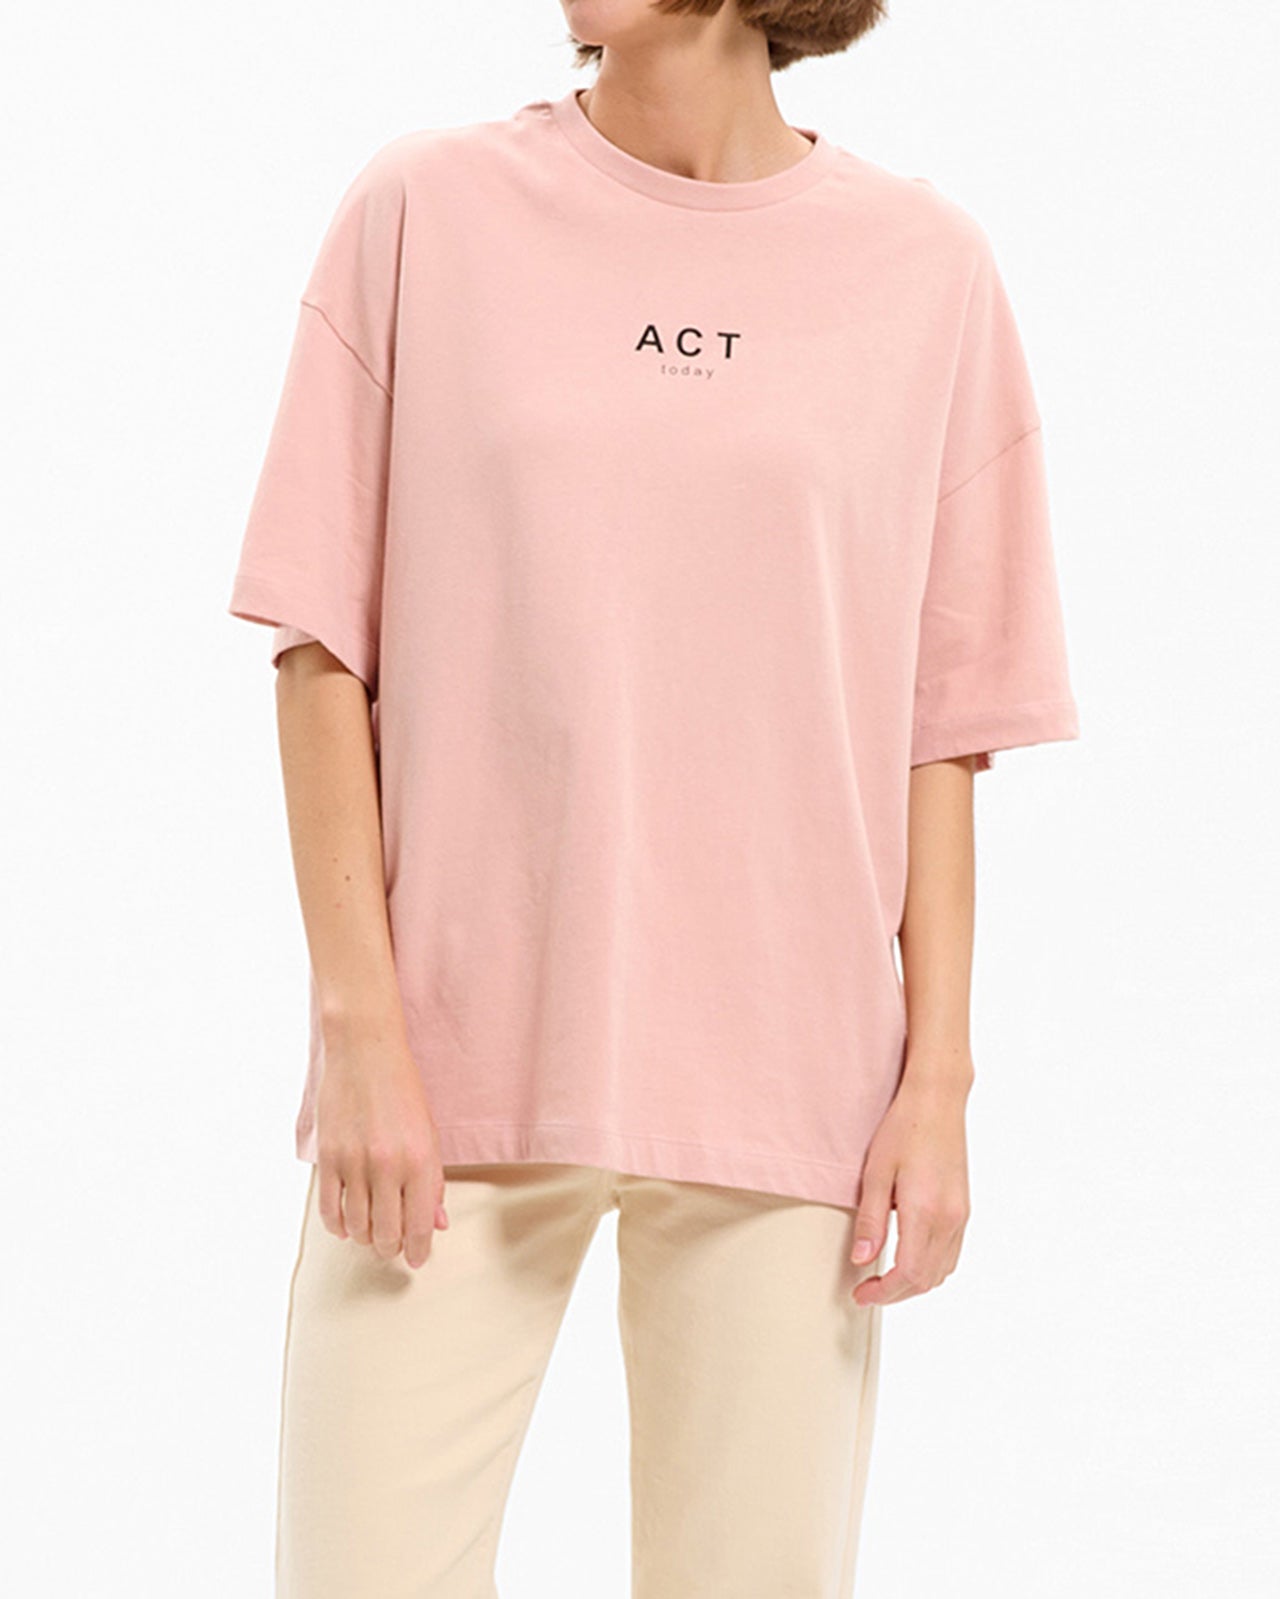 ACT today KIM t-shirt T-Shirt 425 Dust Rose